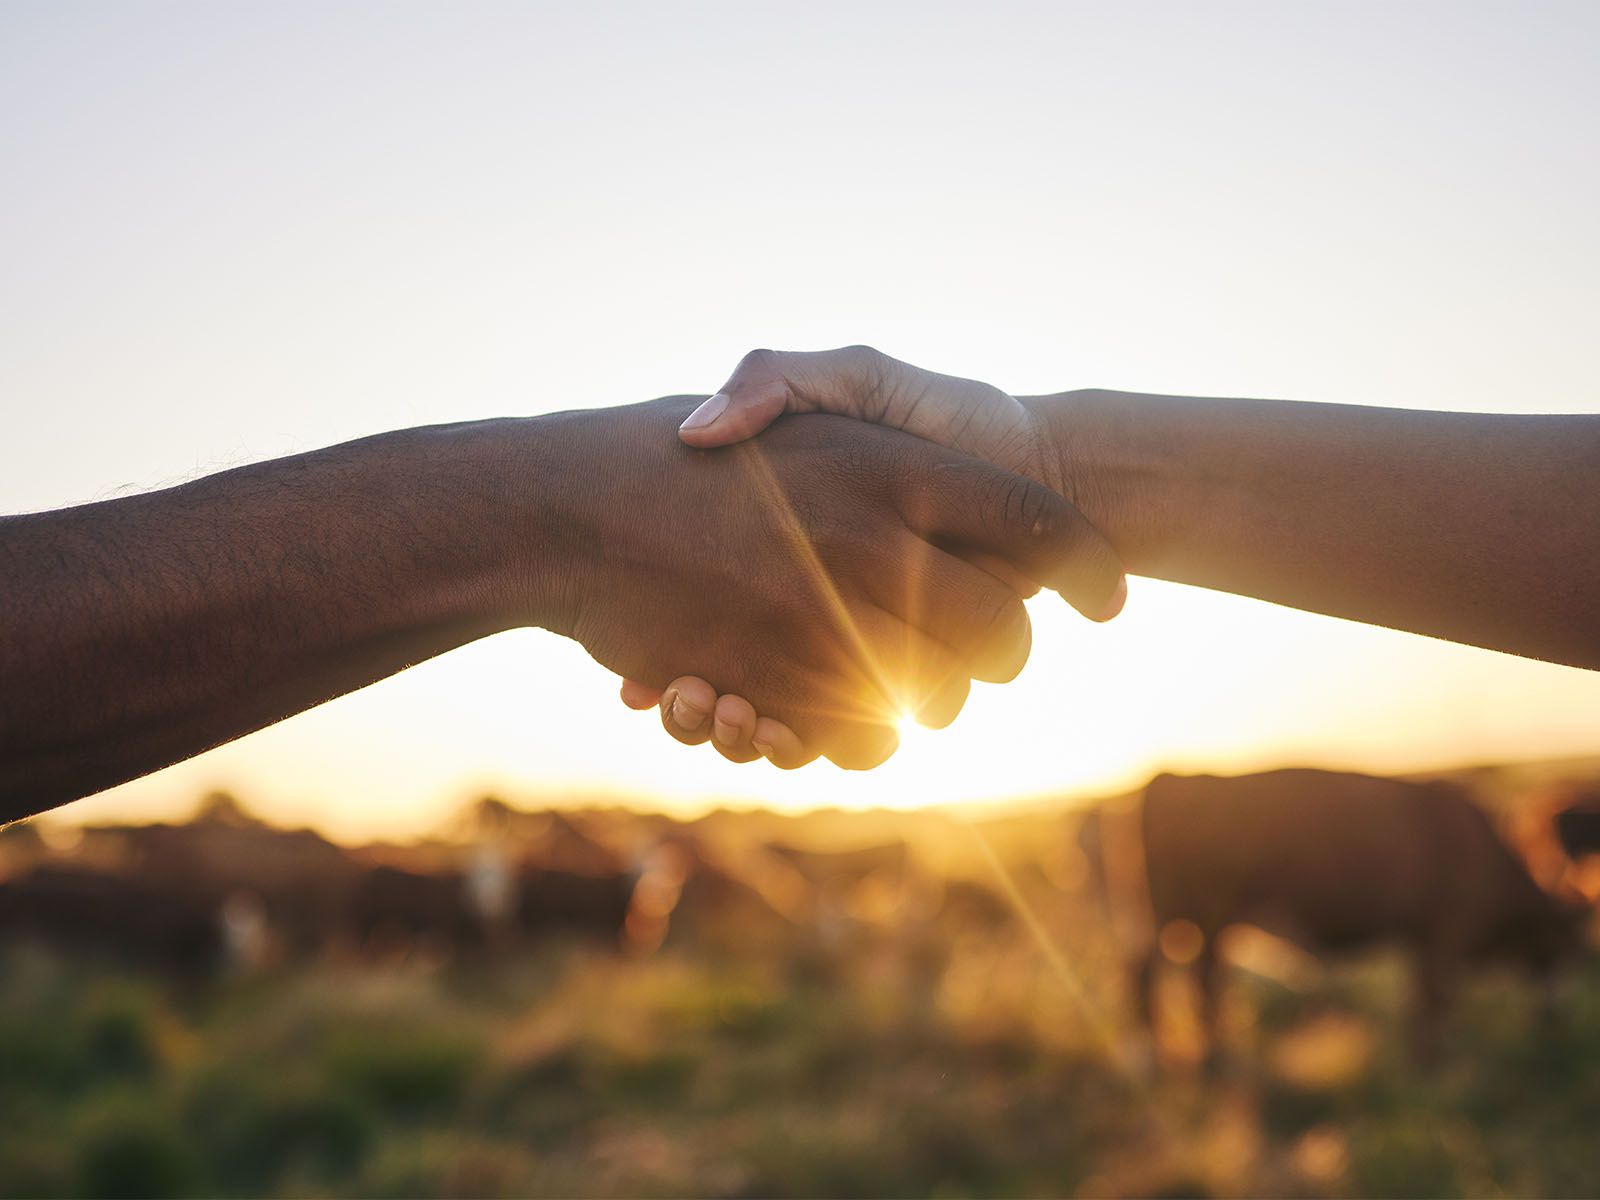 Harvex farm supply farmers shaking hands